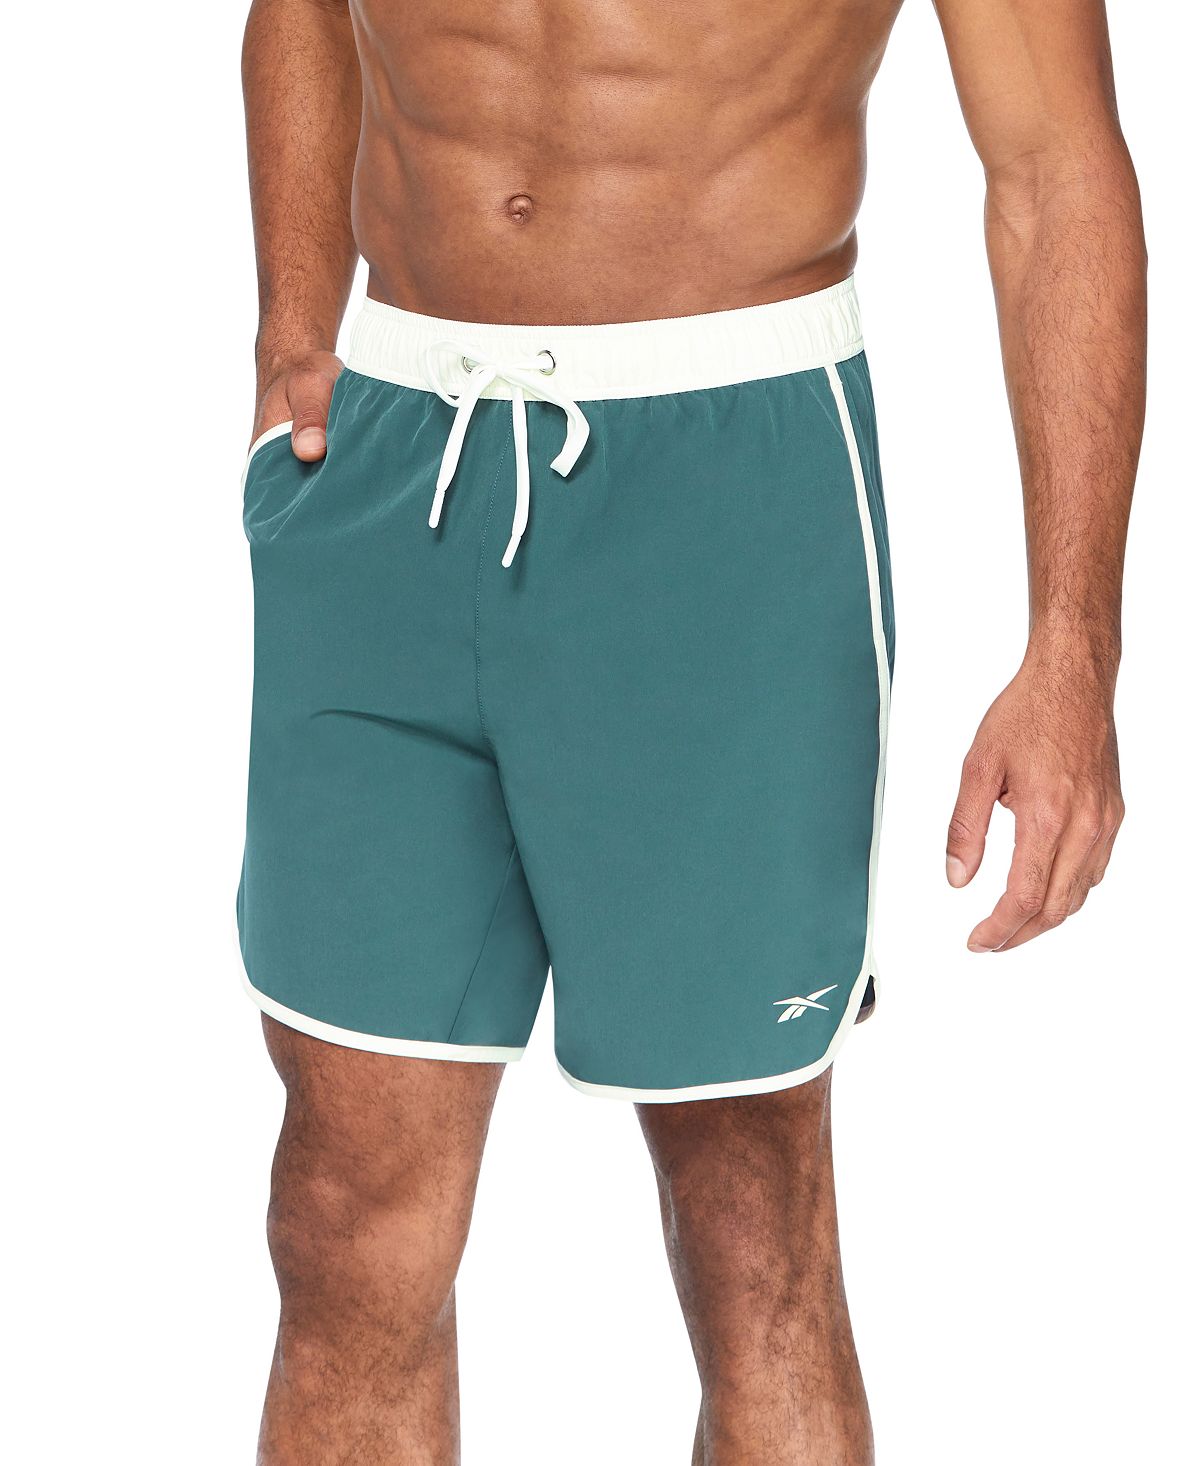 Мужские шорты для плавания Core Volley 7 дюймов Reebok цена и фото